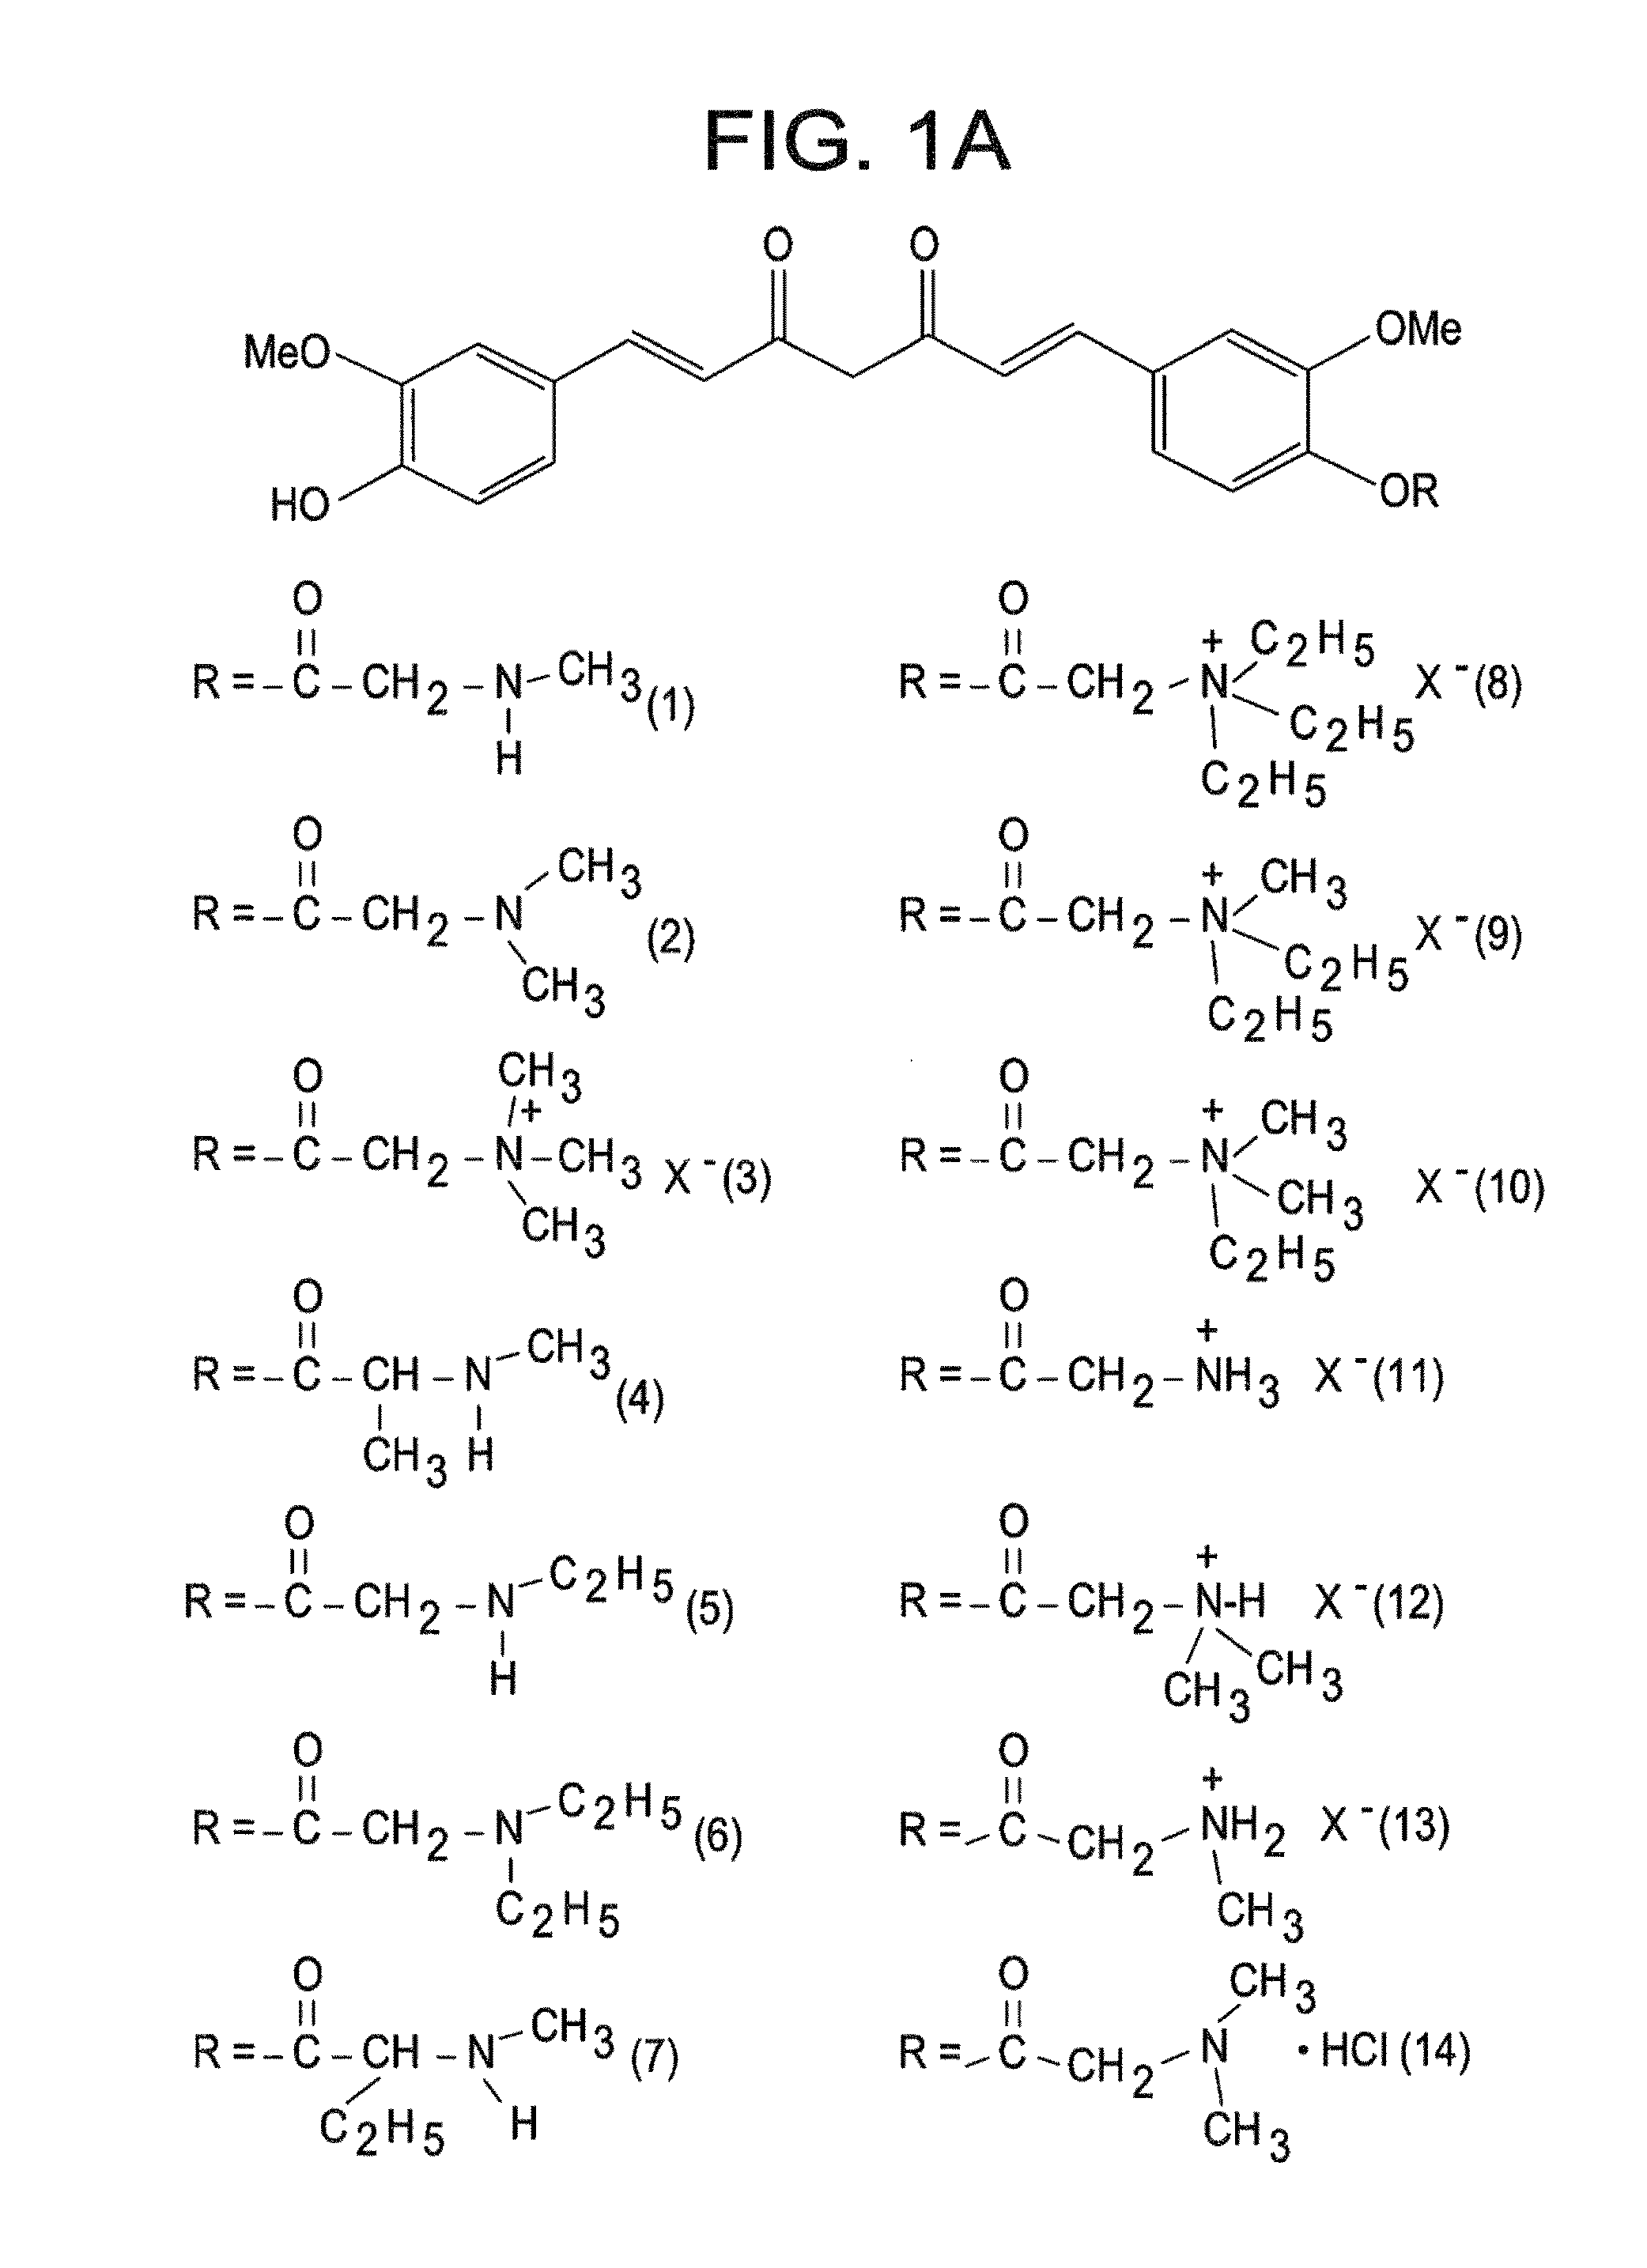 Curcumin derivatives